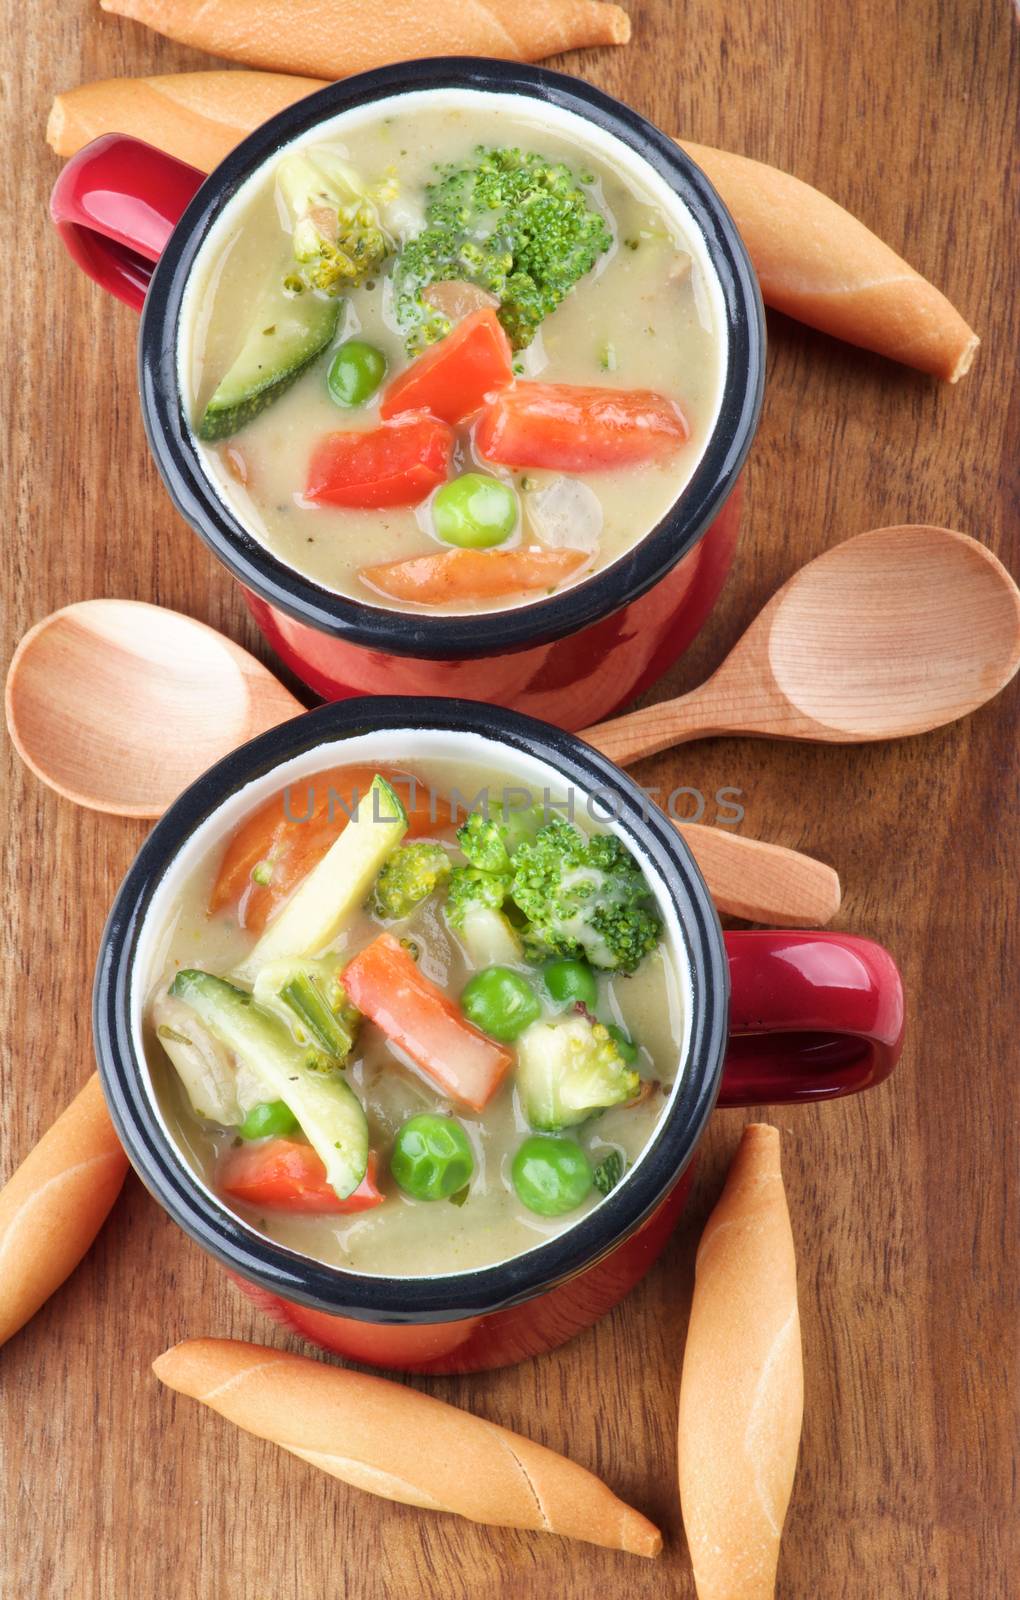 Vegetables Creamy Soup by zhekos